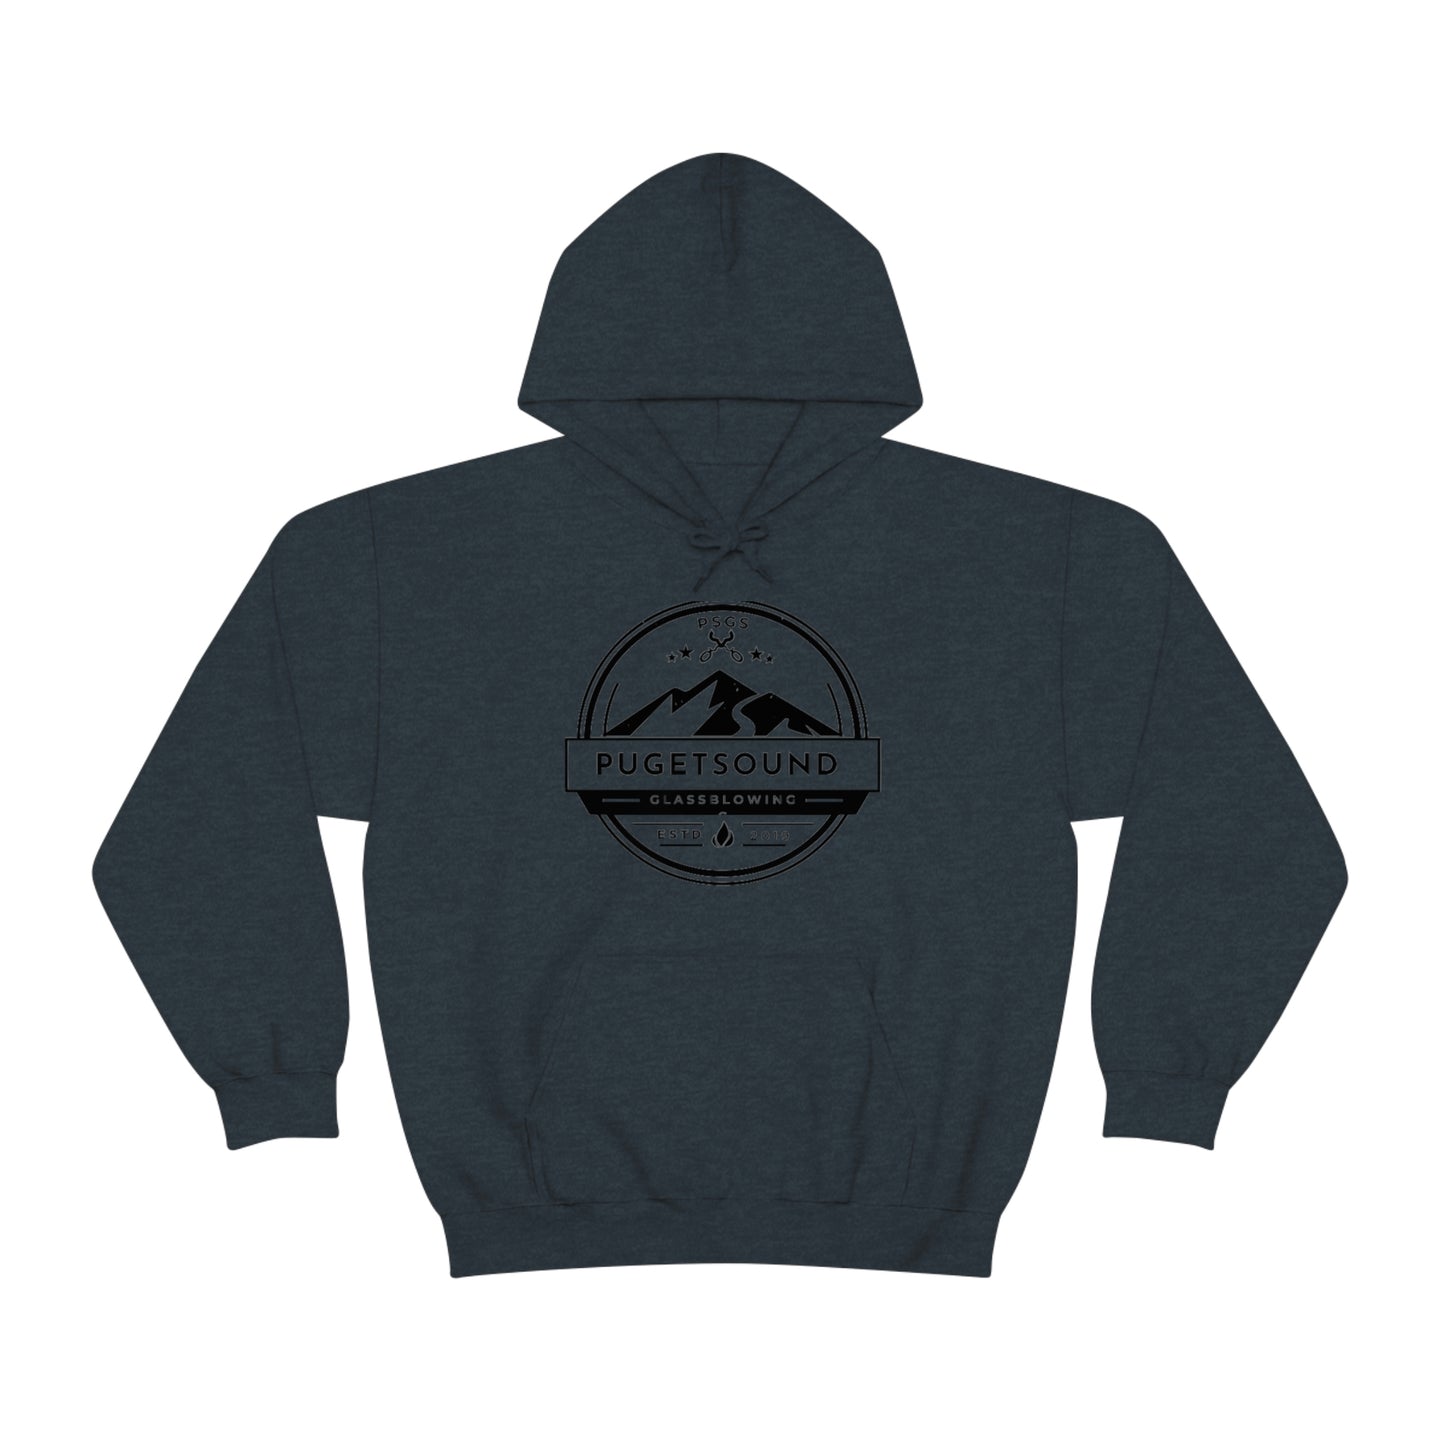 Puget Sound Glassblowing Hooded Sweatshirt